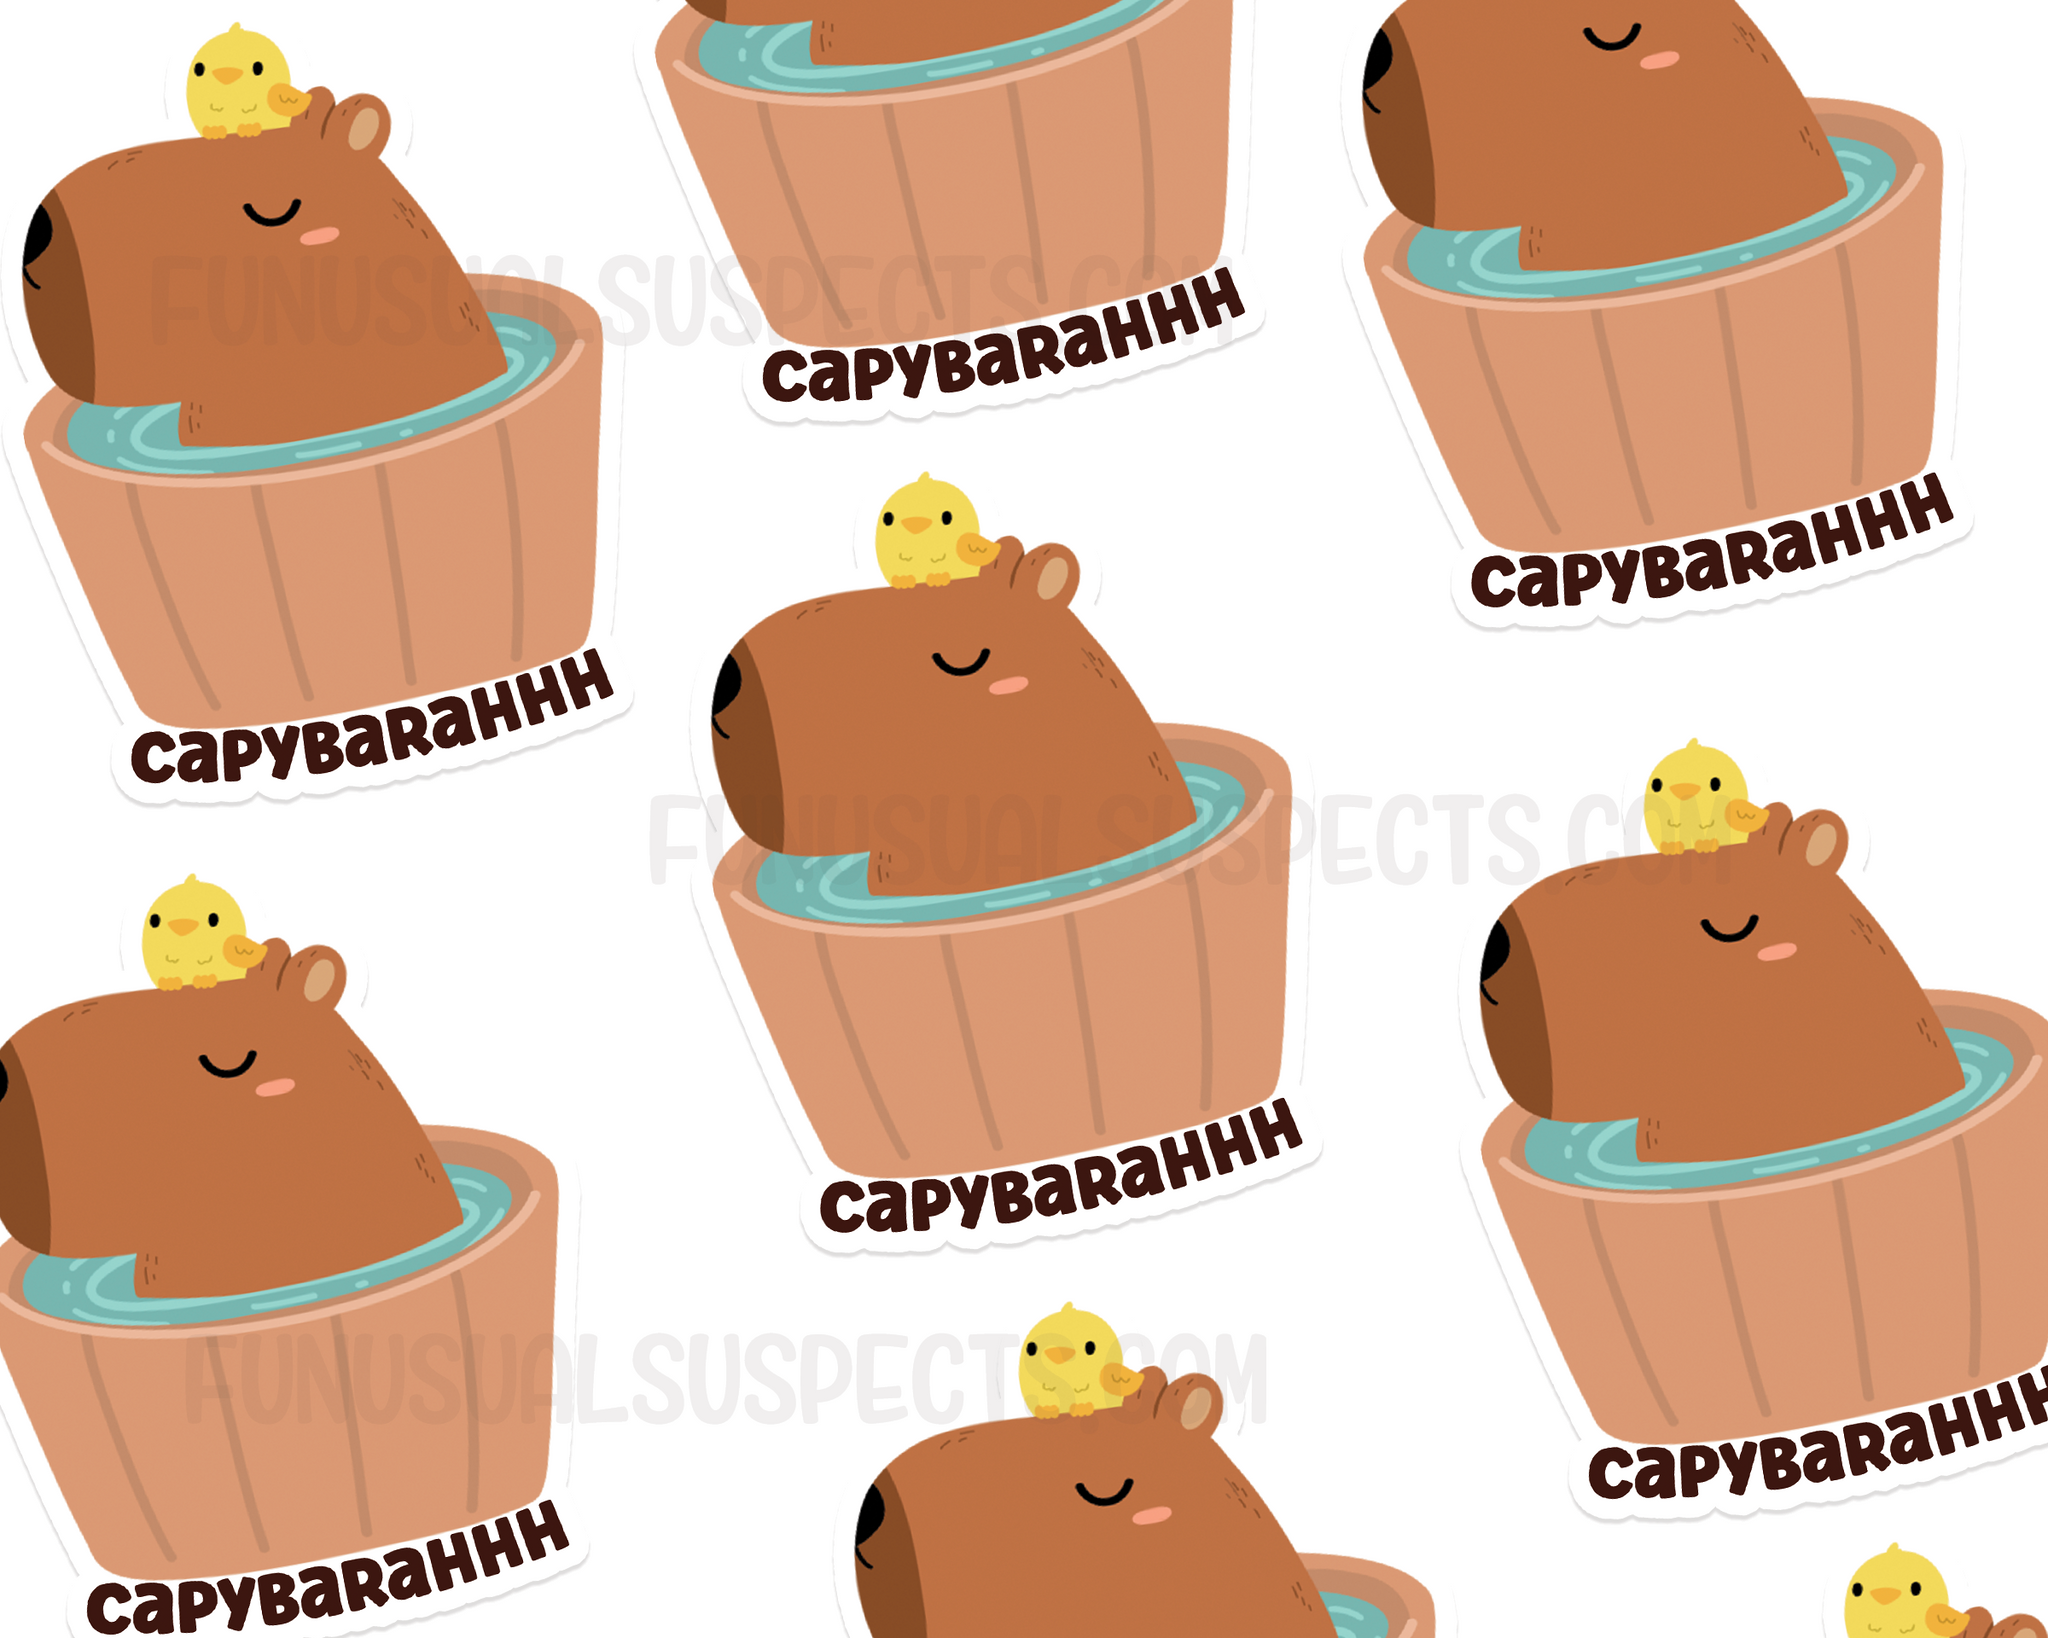 Capybara Pun Sticker